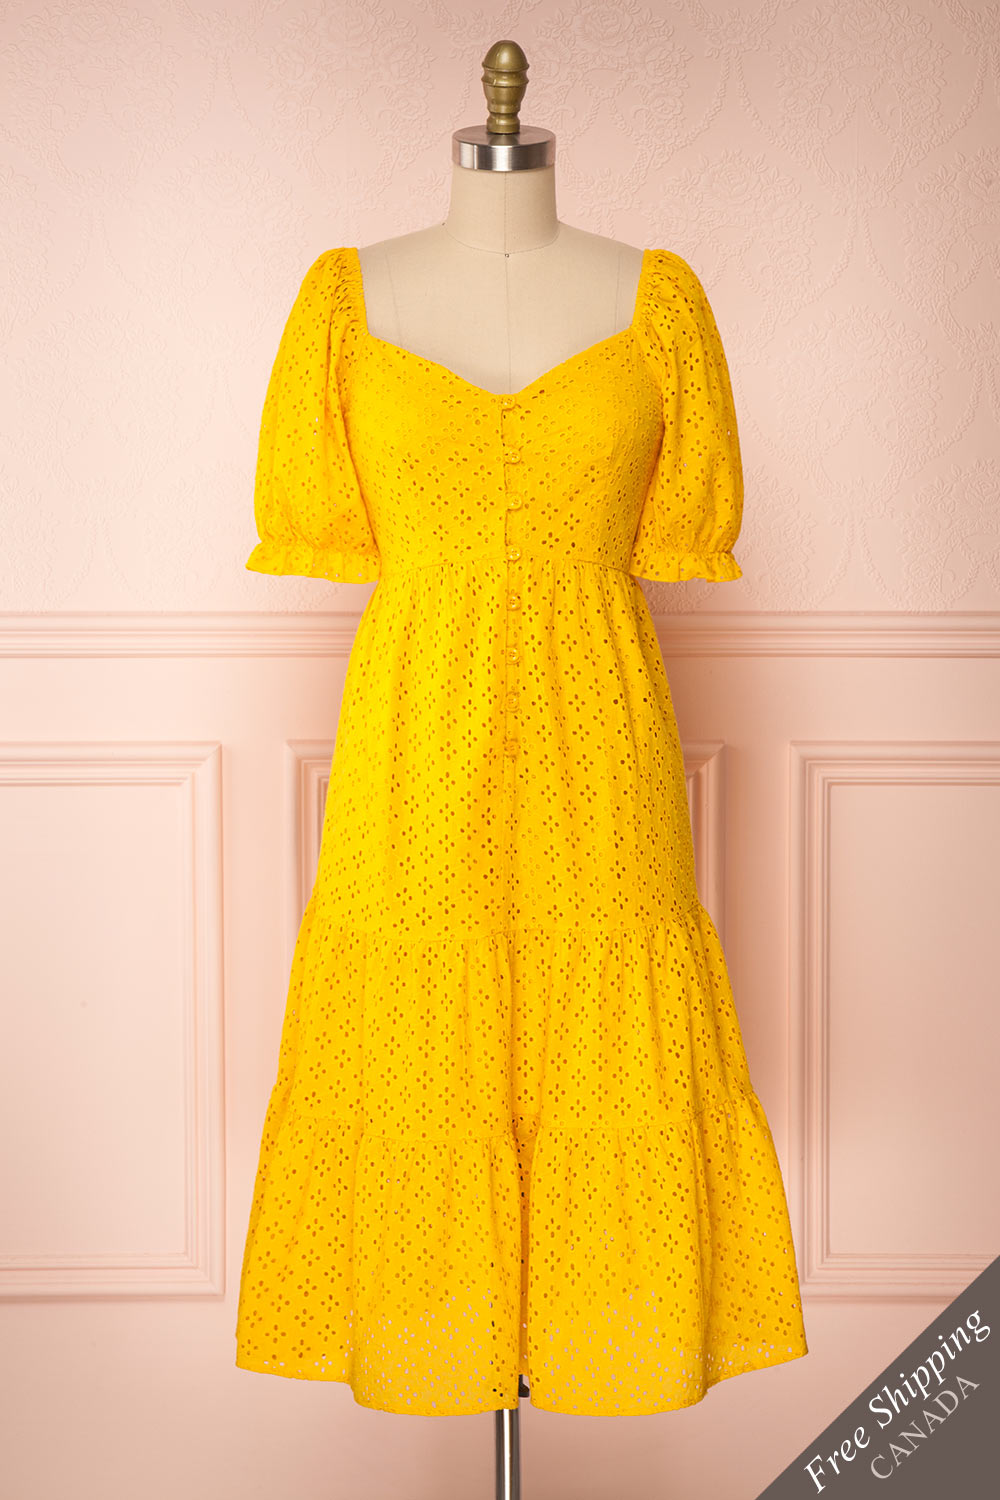 Gloria Yellow A-Line Openwork Midi Dress | Boutique 1861 front view